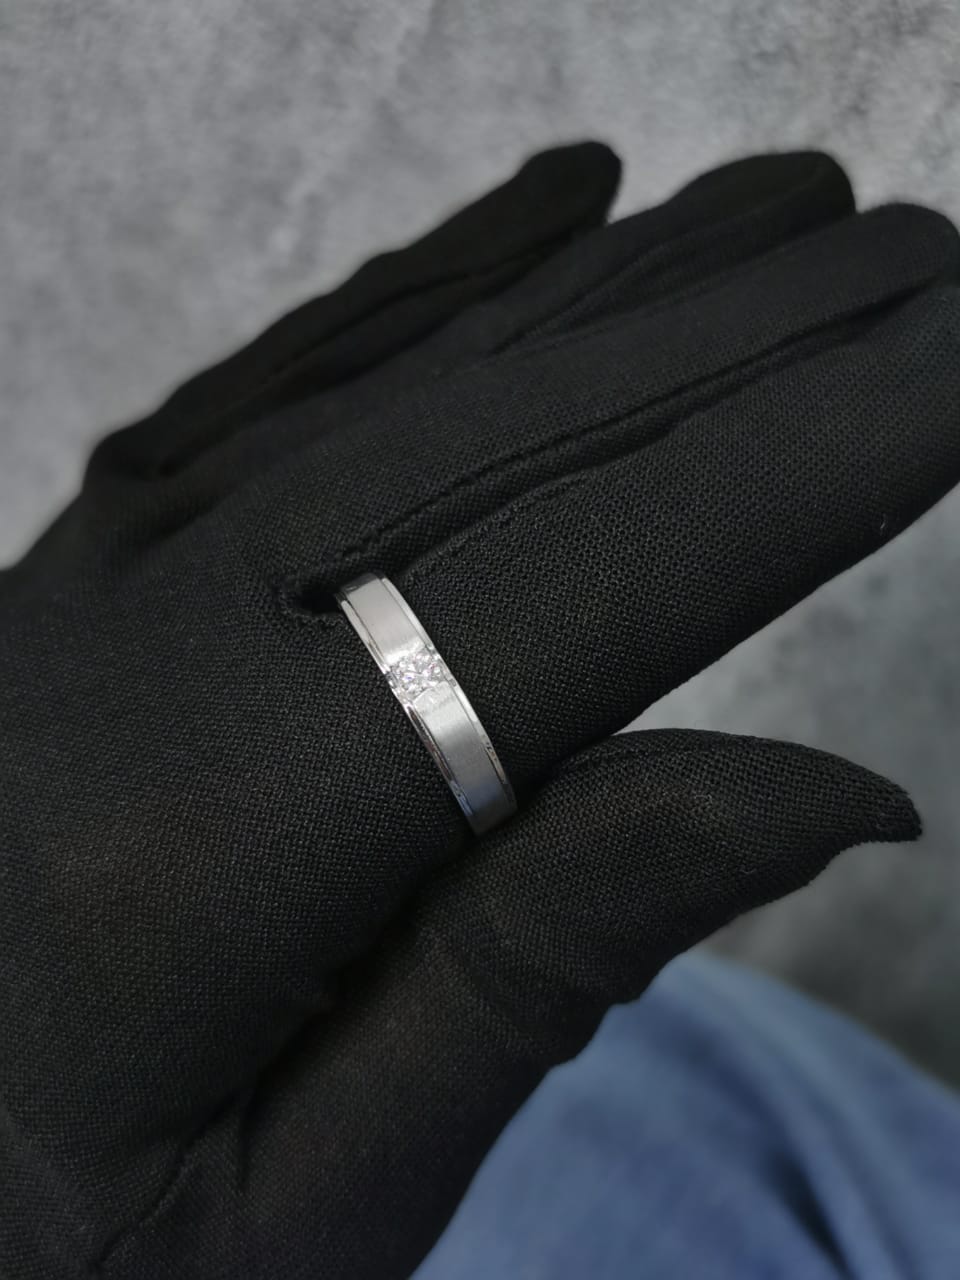 Men's Solitaire Diamond Ring In 18k White Gold.